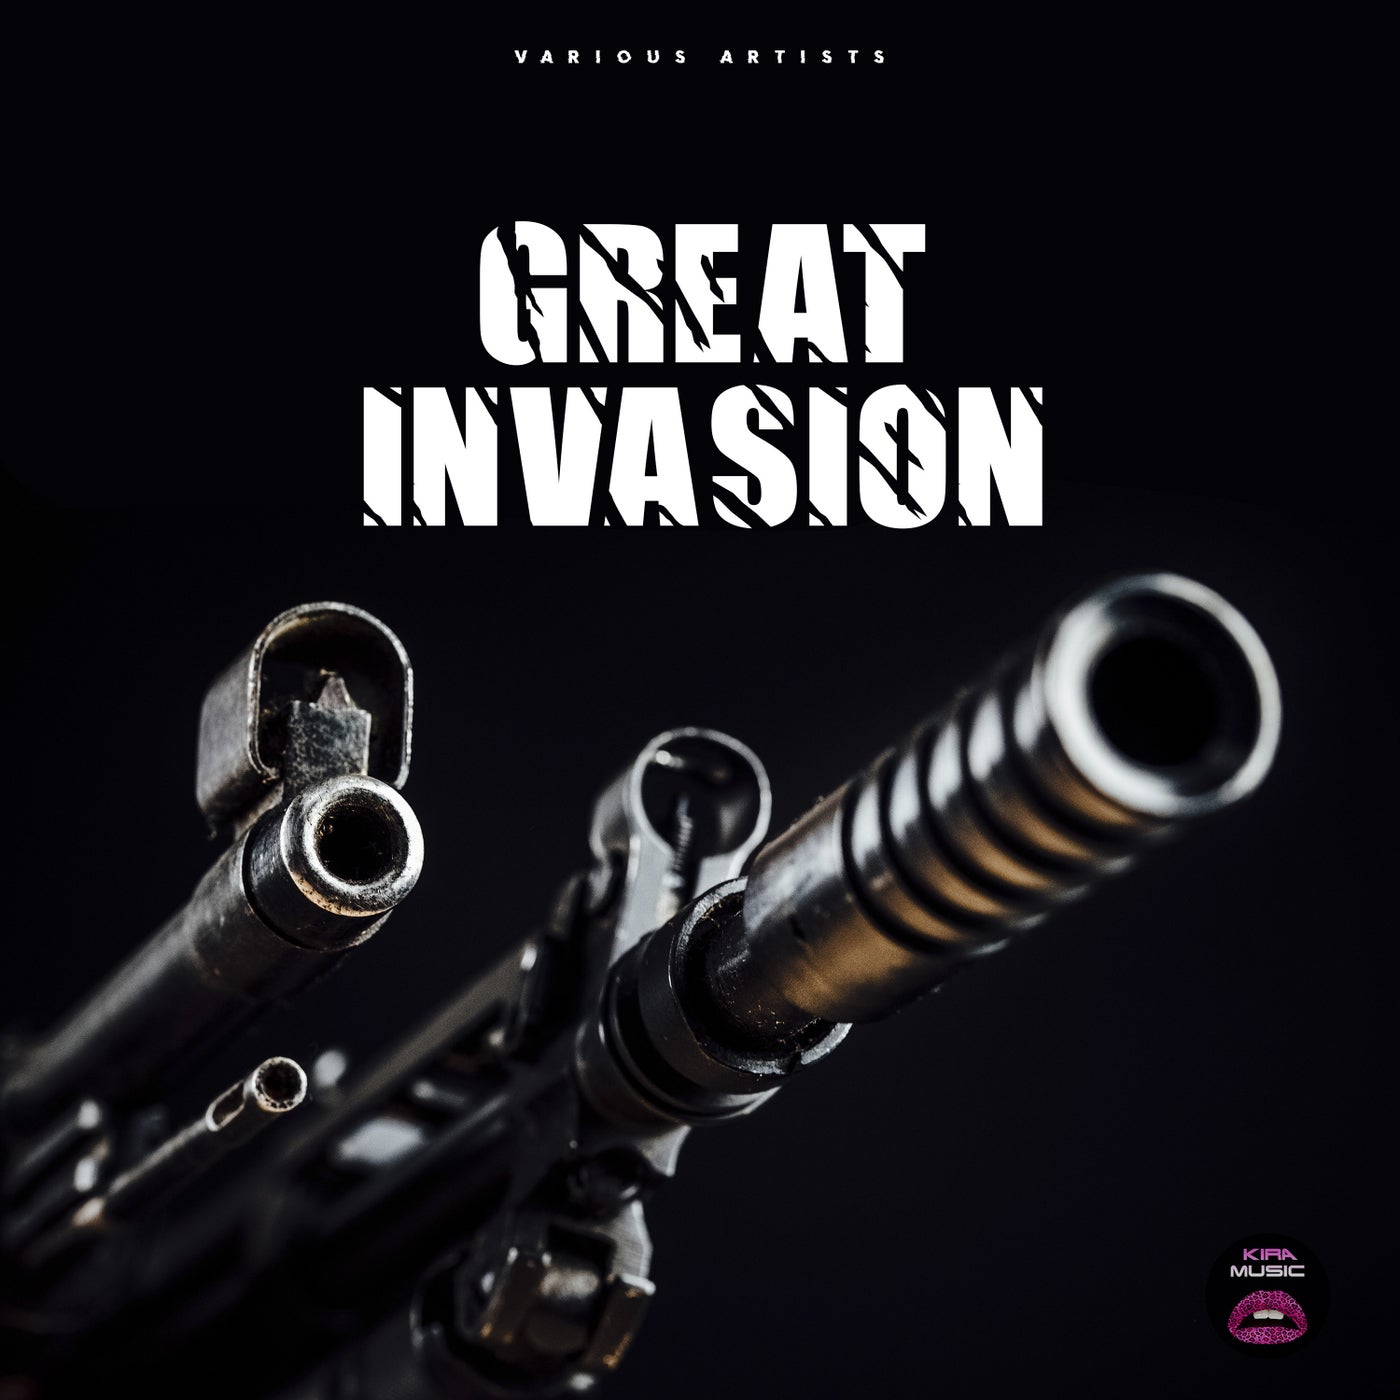 Great Invasion